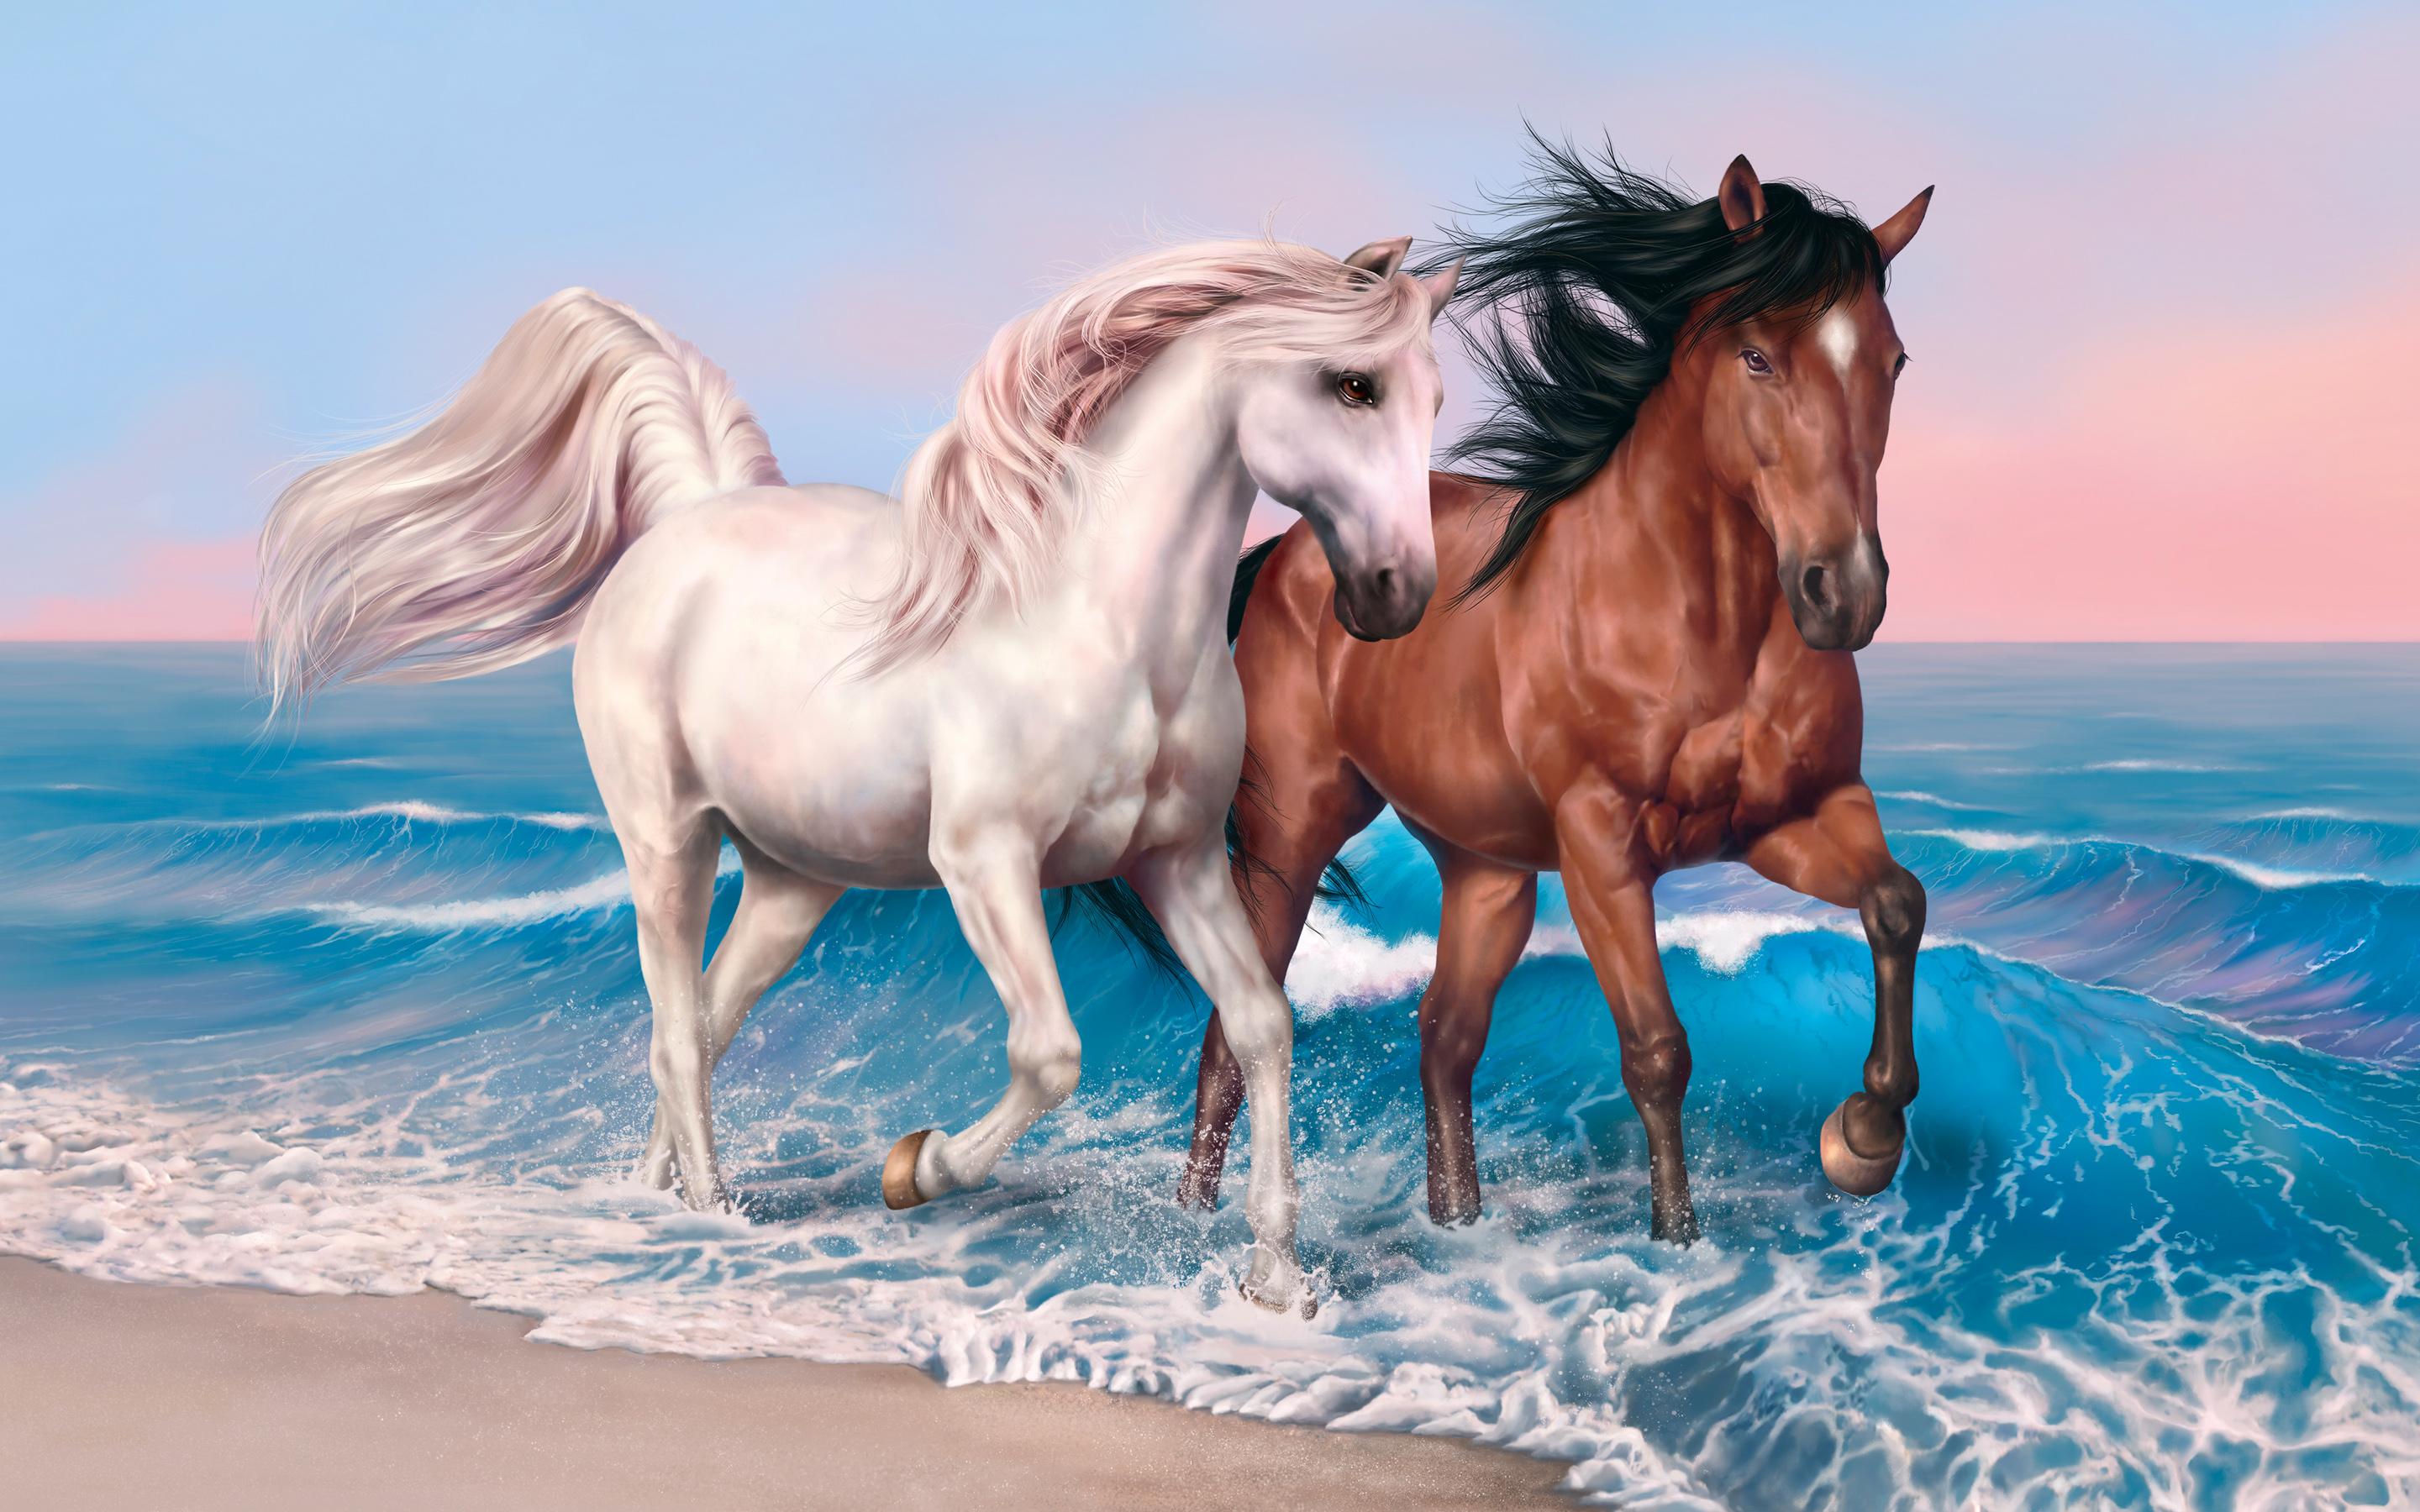 Horses Art Wallpaper Creative And Graphics Wallpaper Better